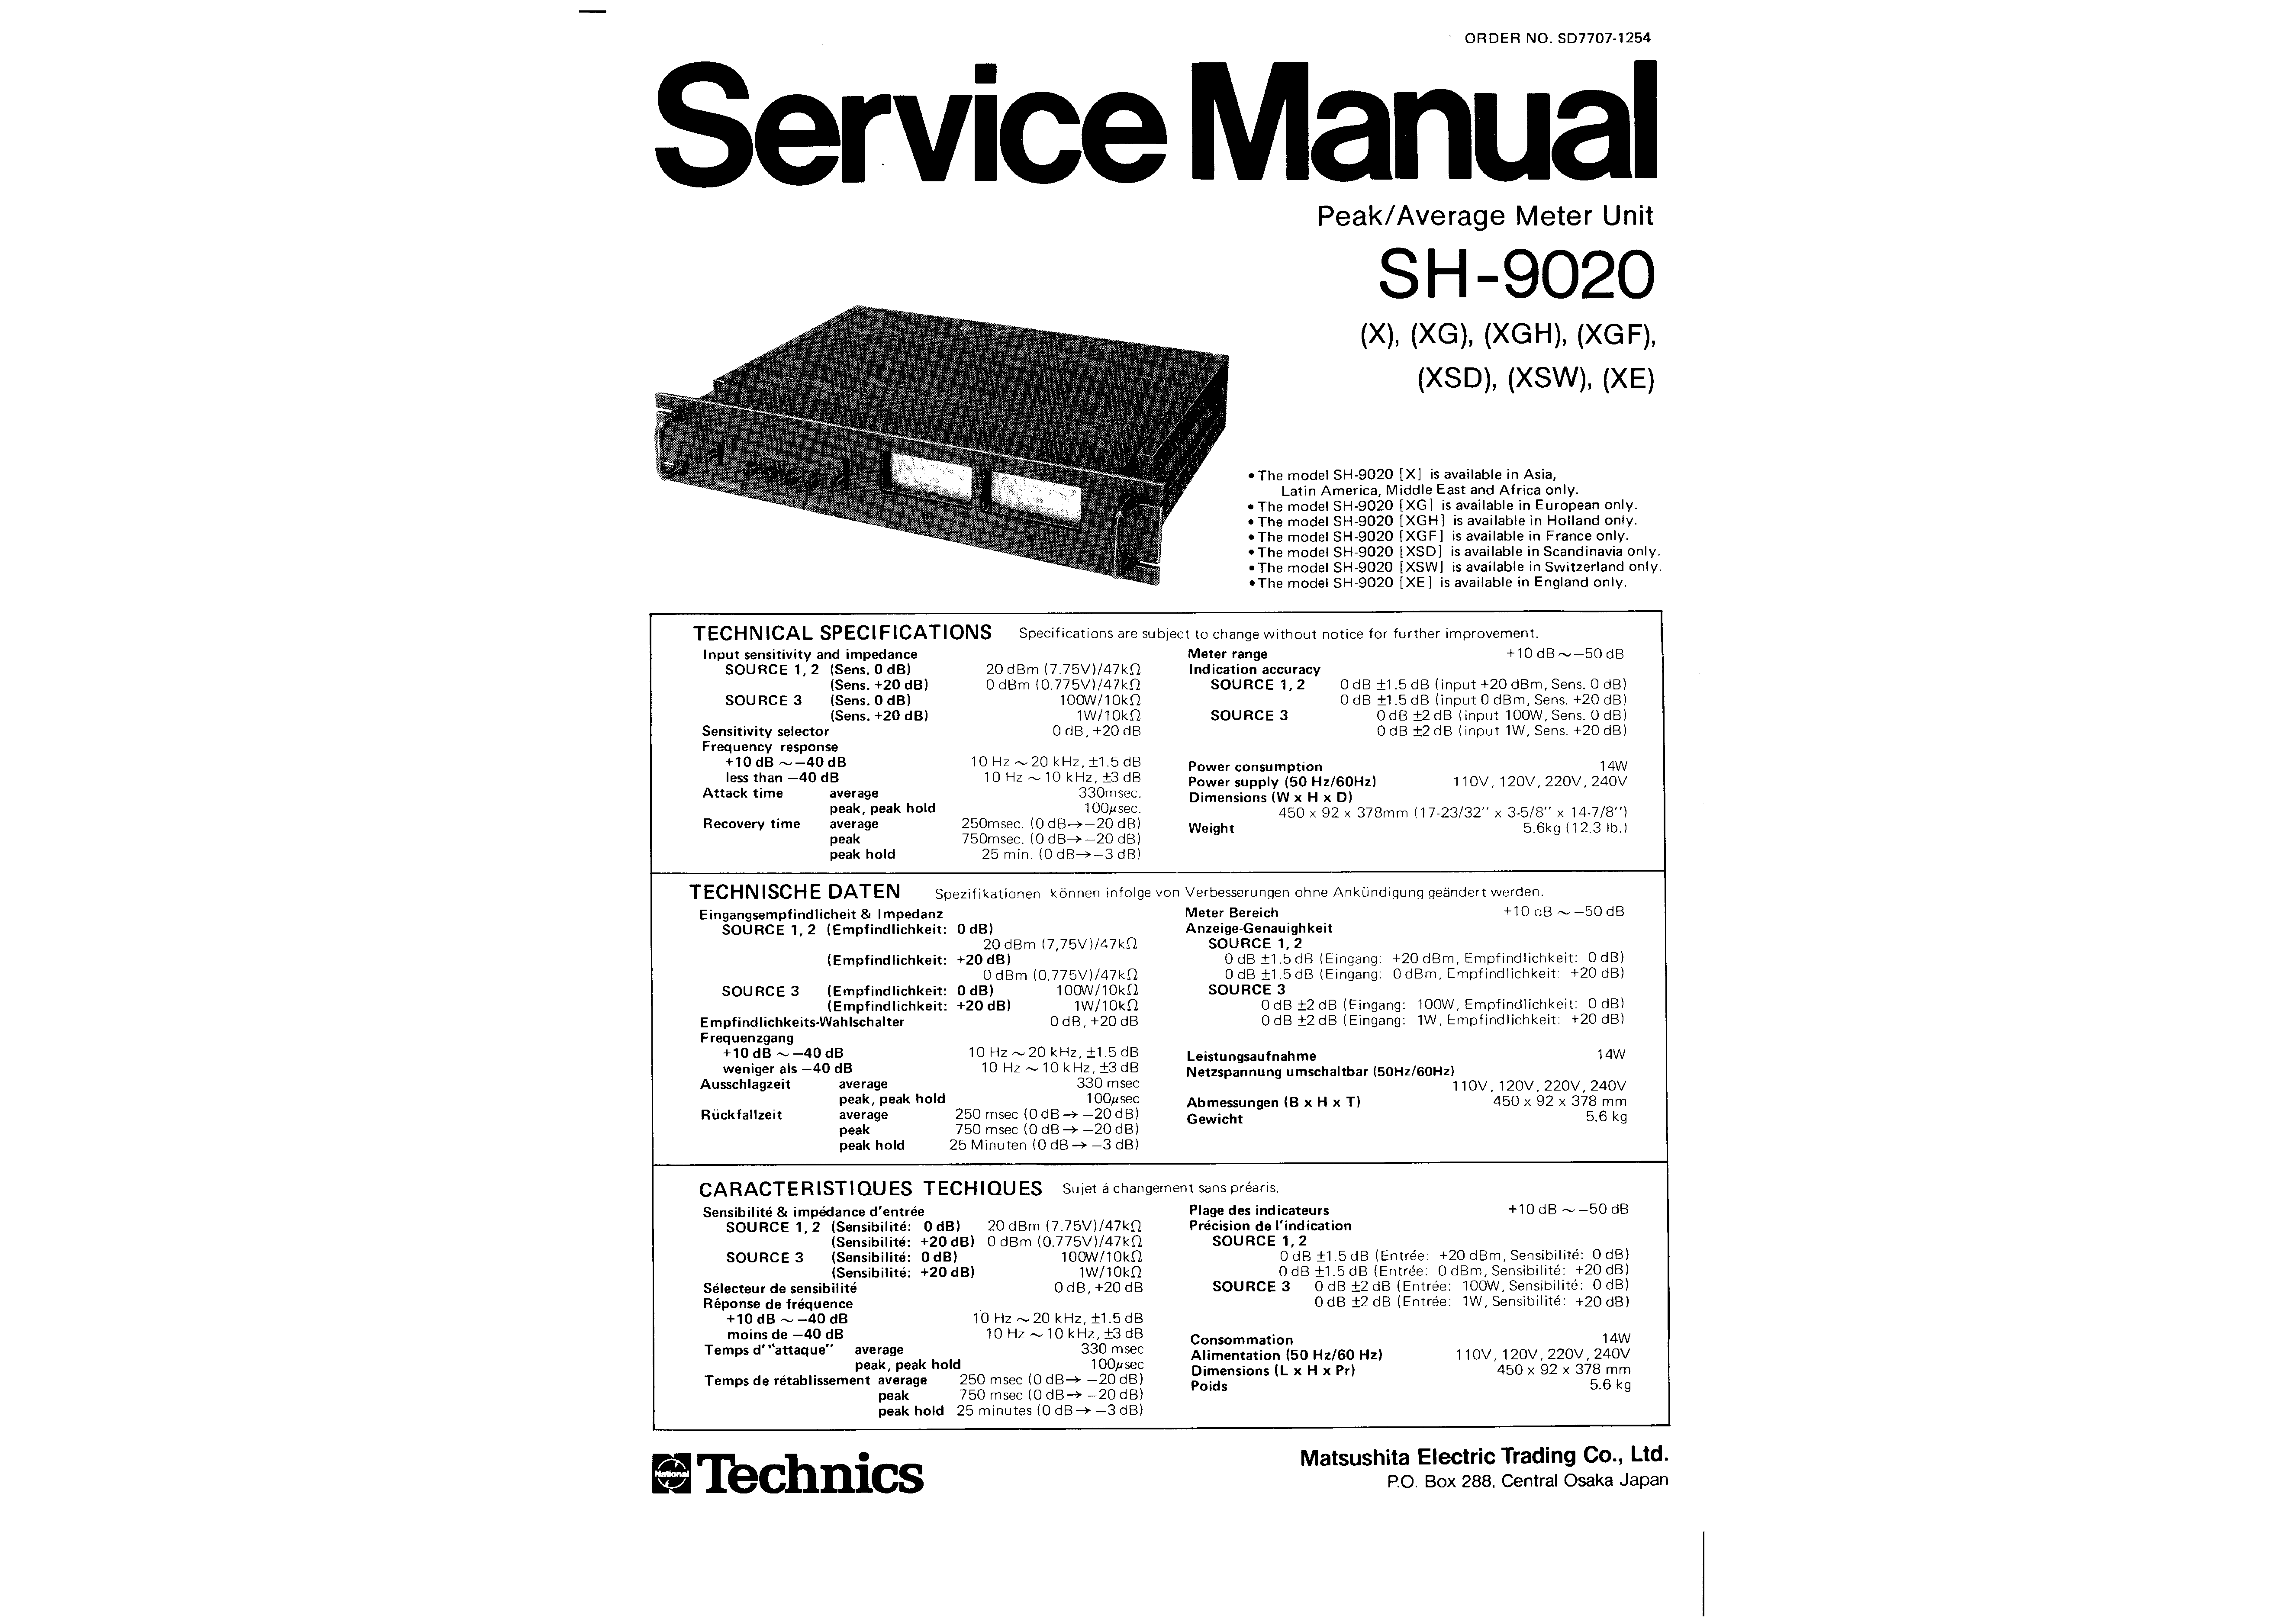 Free service manual download